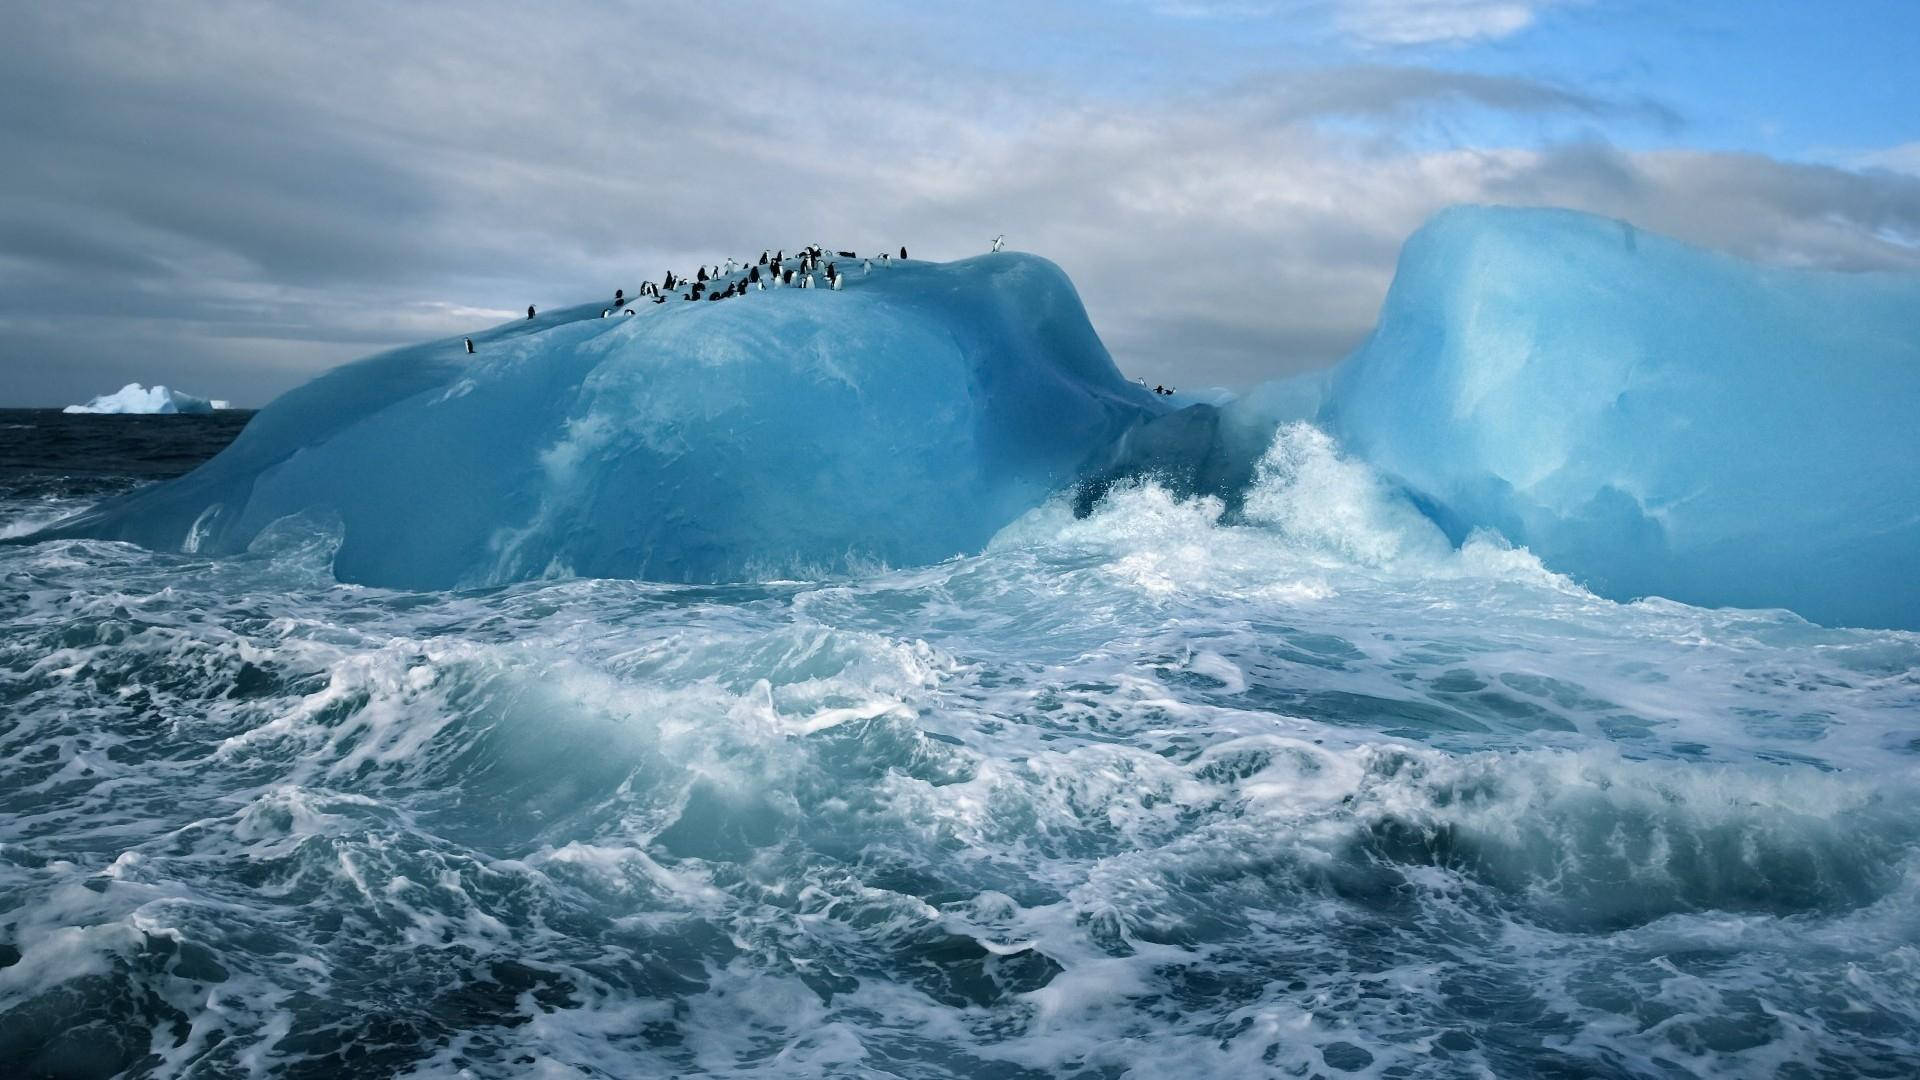 Arctic Iceberg With Penguins